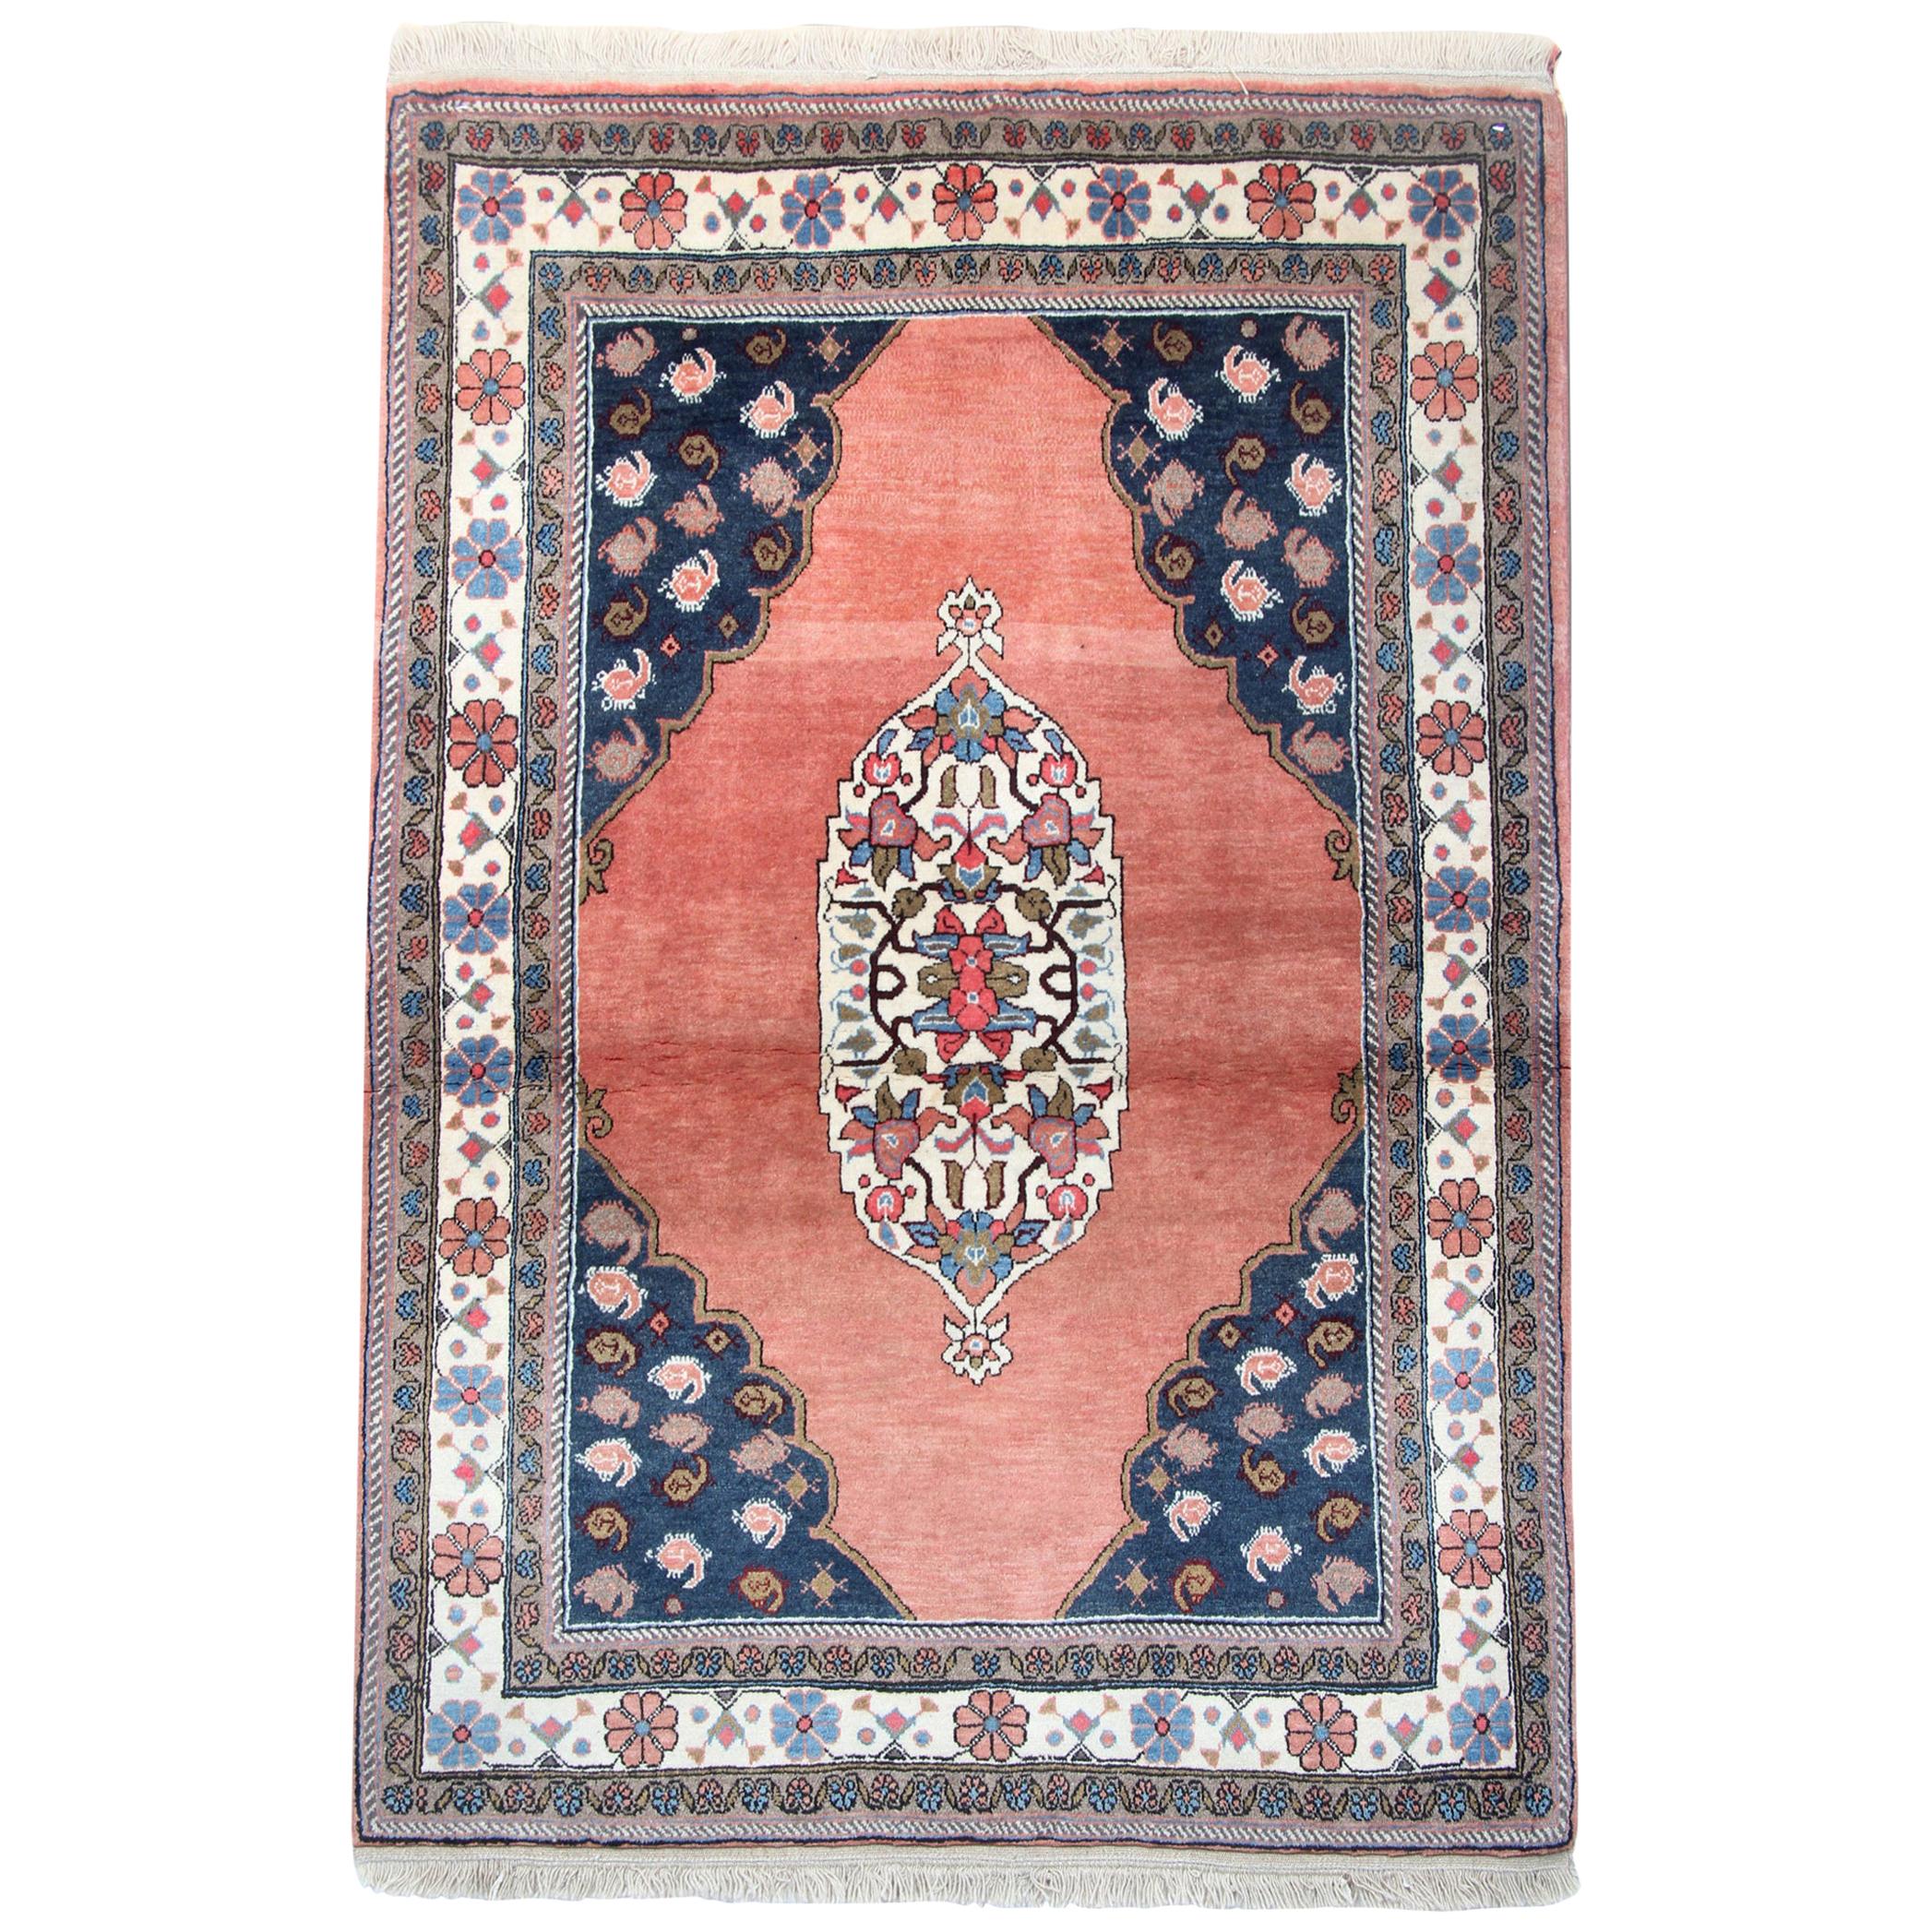 Handmade Oriental Carpet Rug, Traditional Rust Pink Wool Area Rug